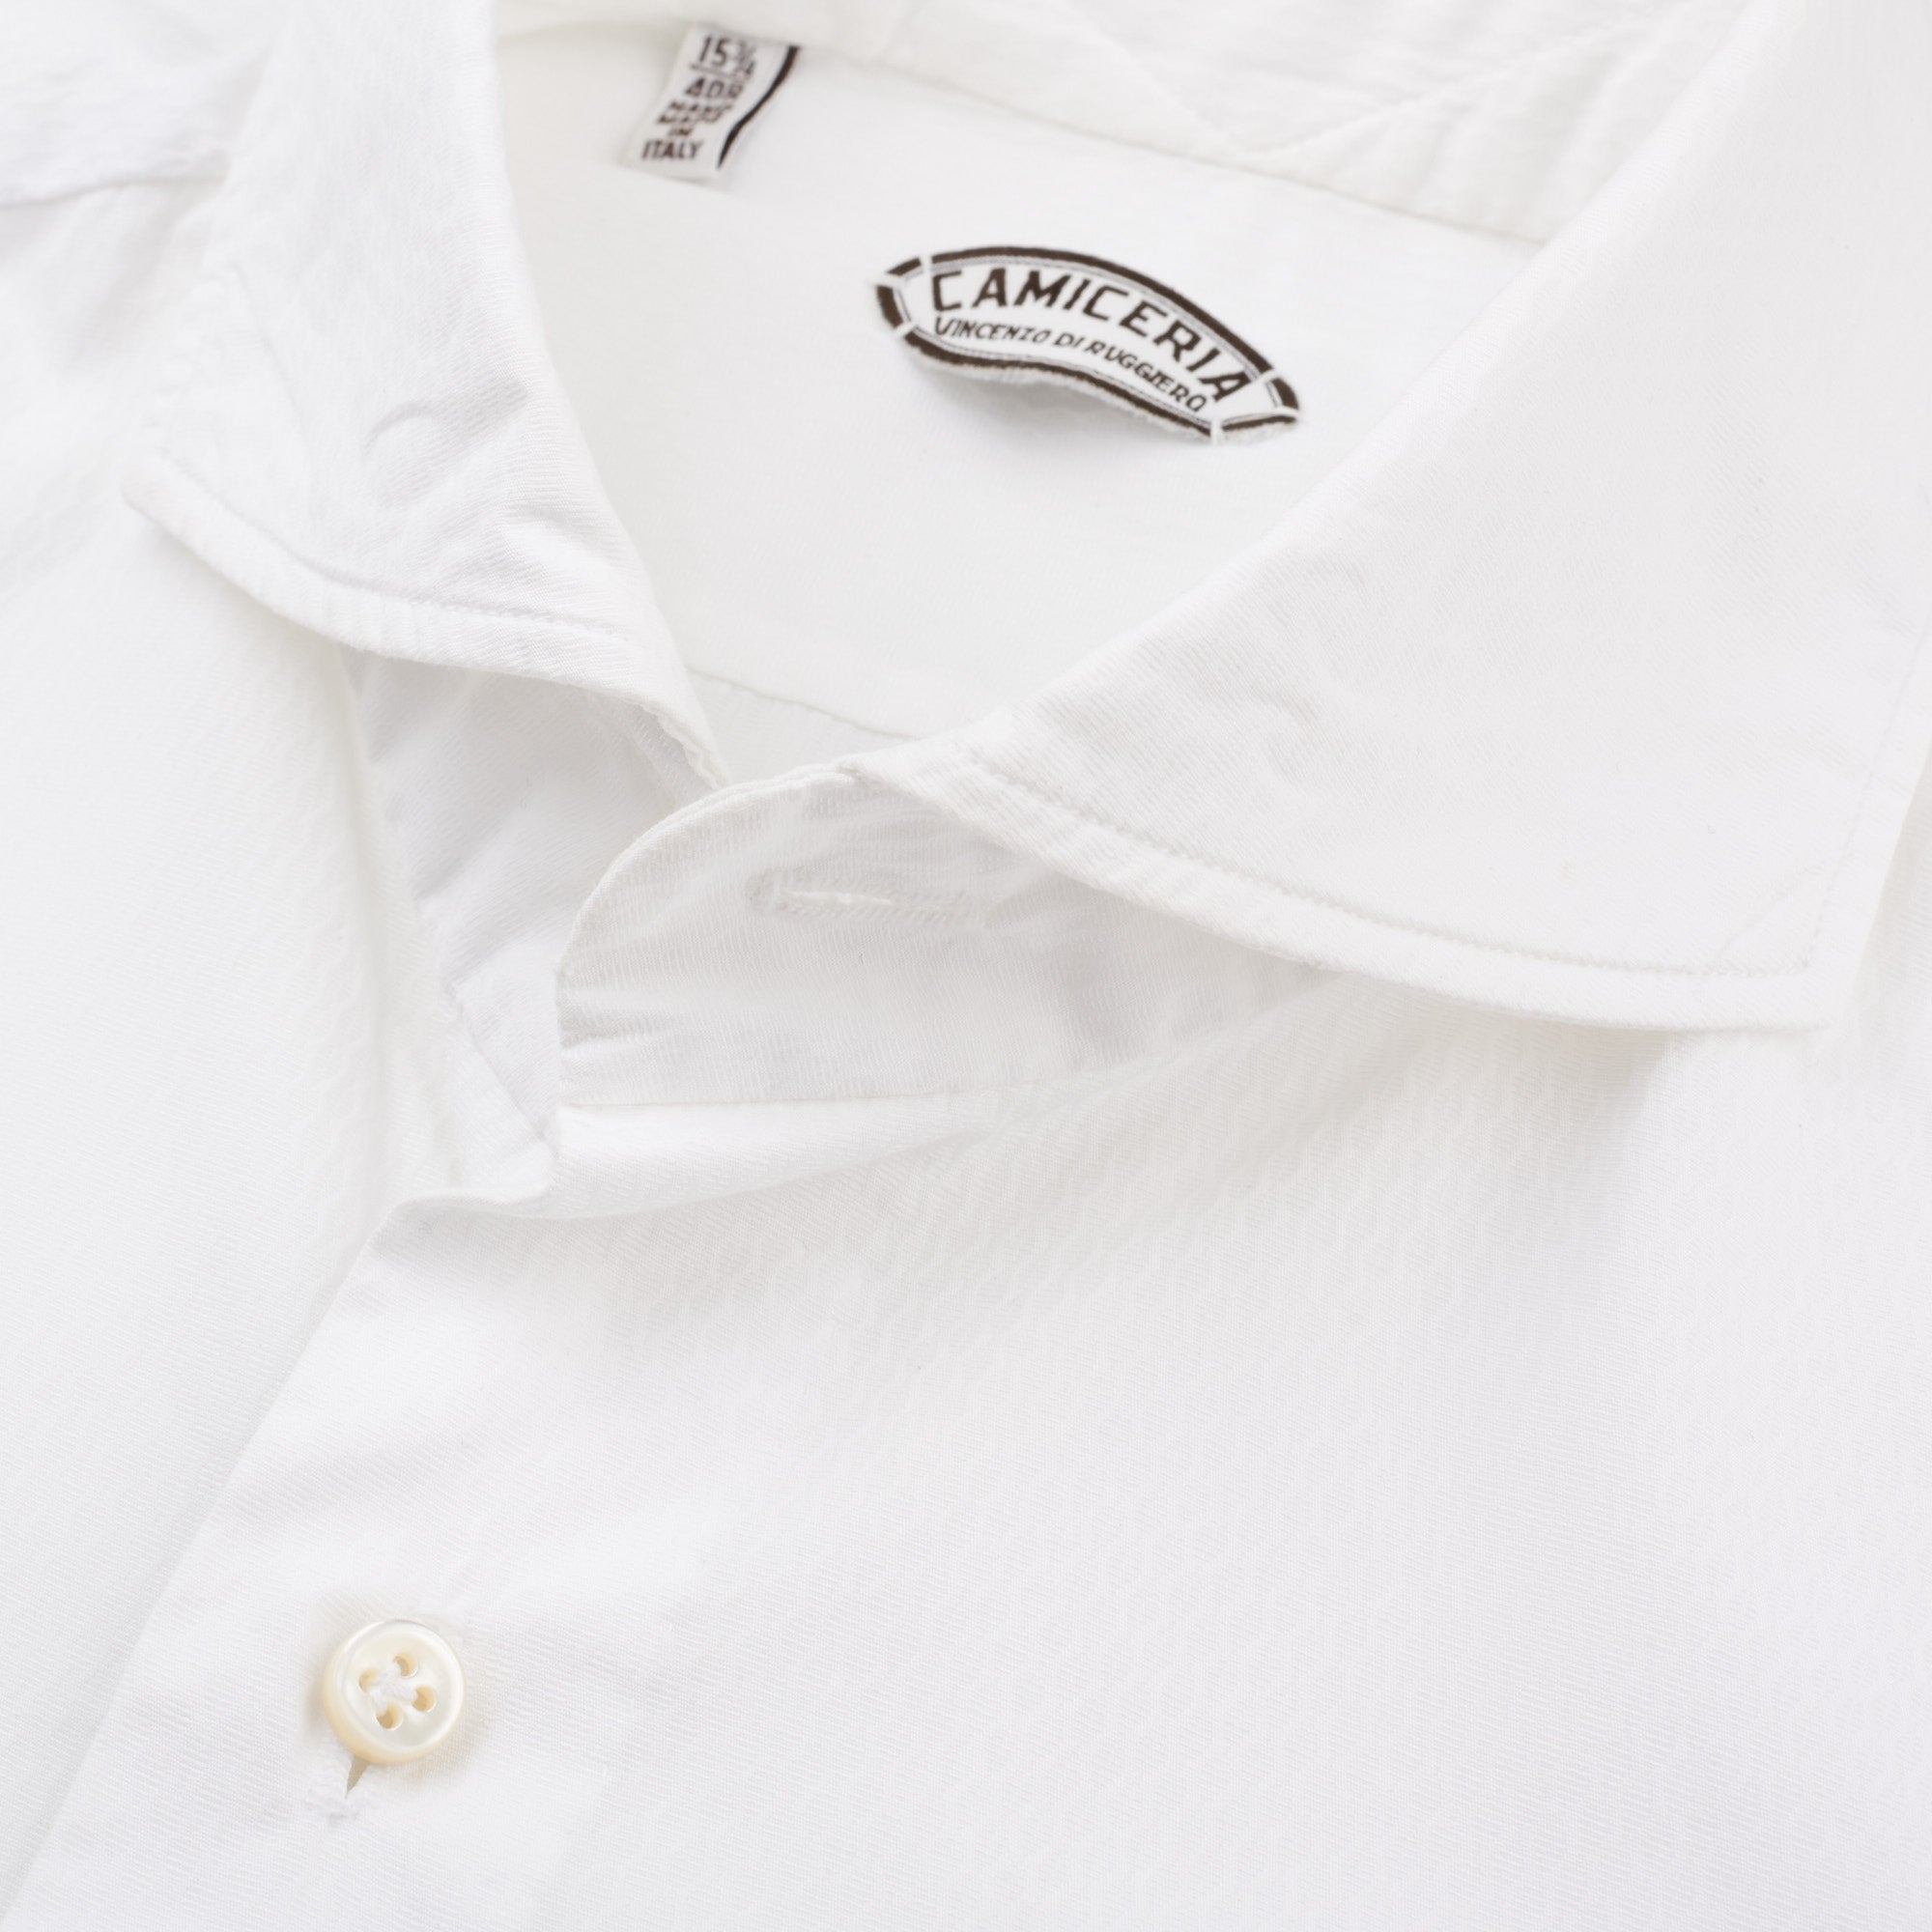 VINCENZO DI RUGGIERO Handmade White Jacquard Cotton Dress Shirt EU 40 US 15.75 VINCENZO DI RUGGIERO